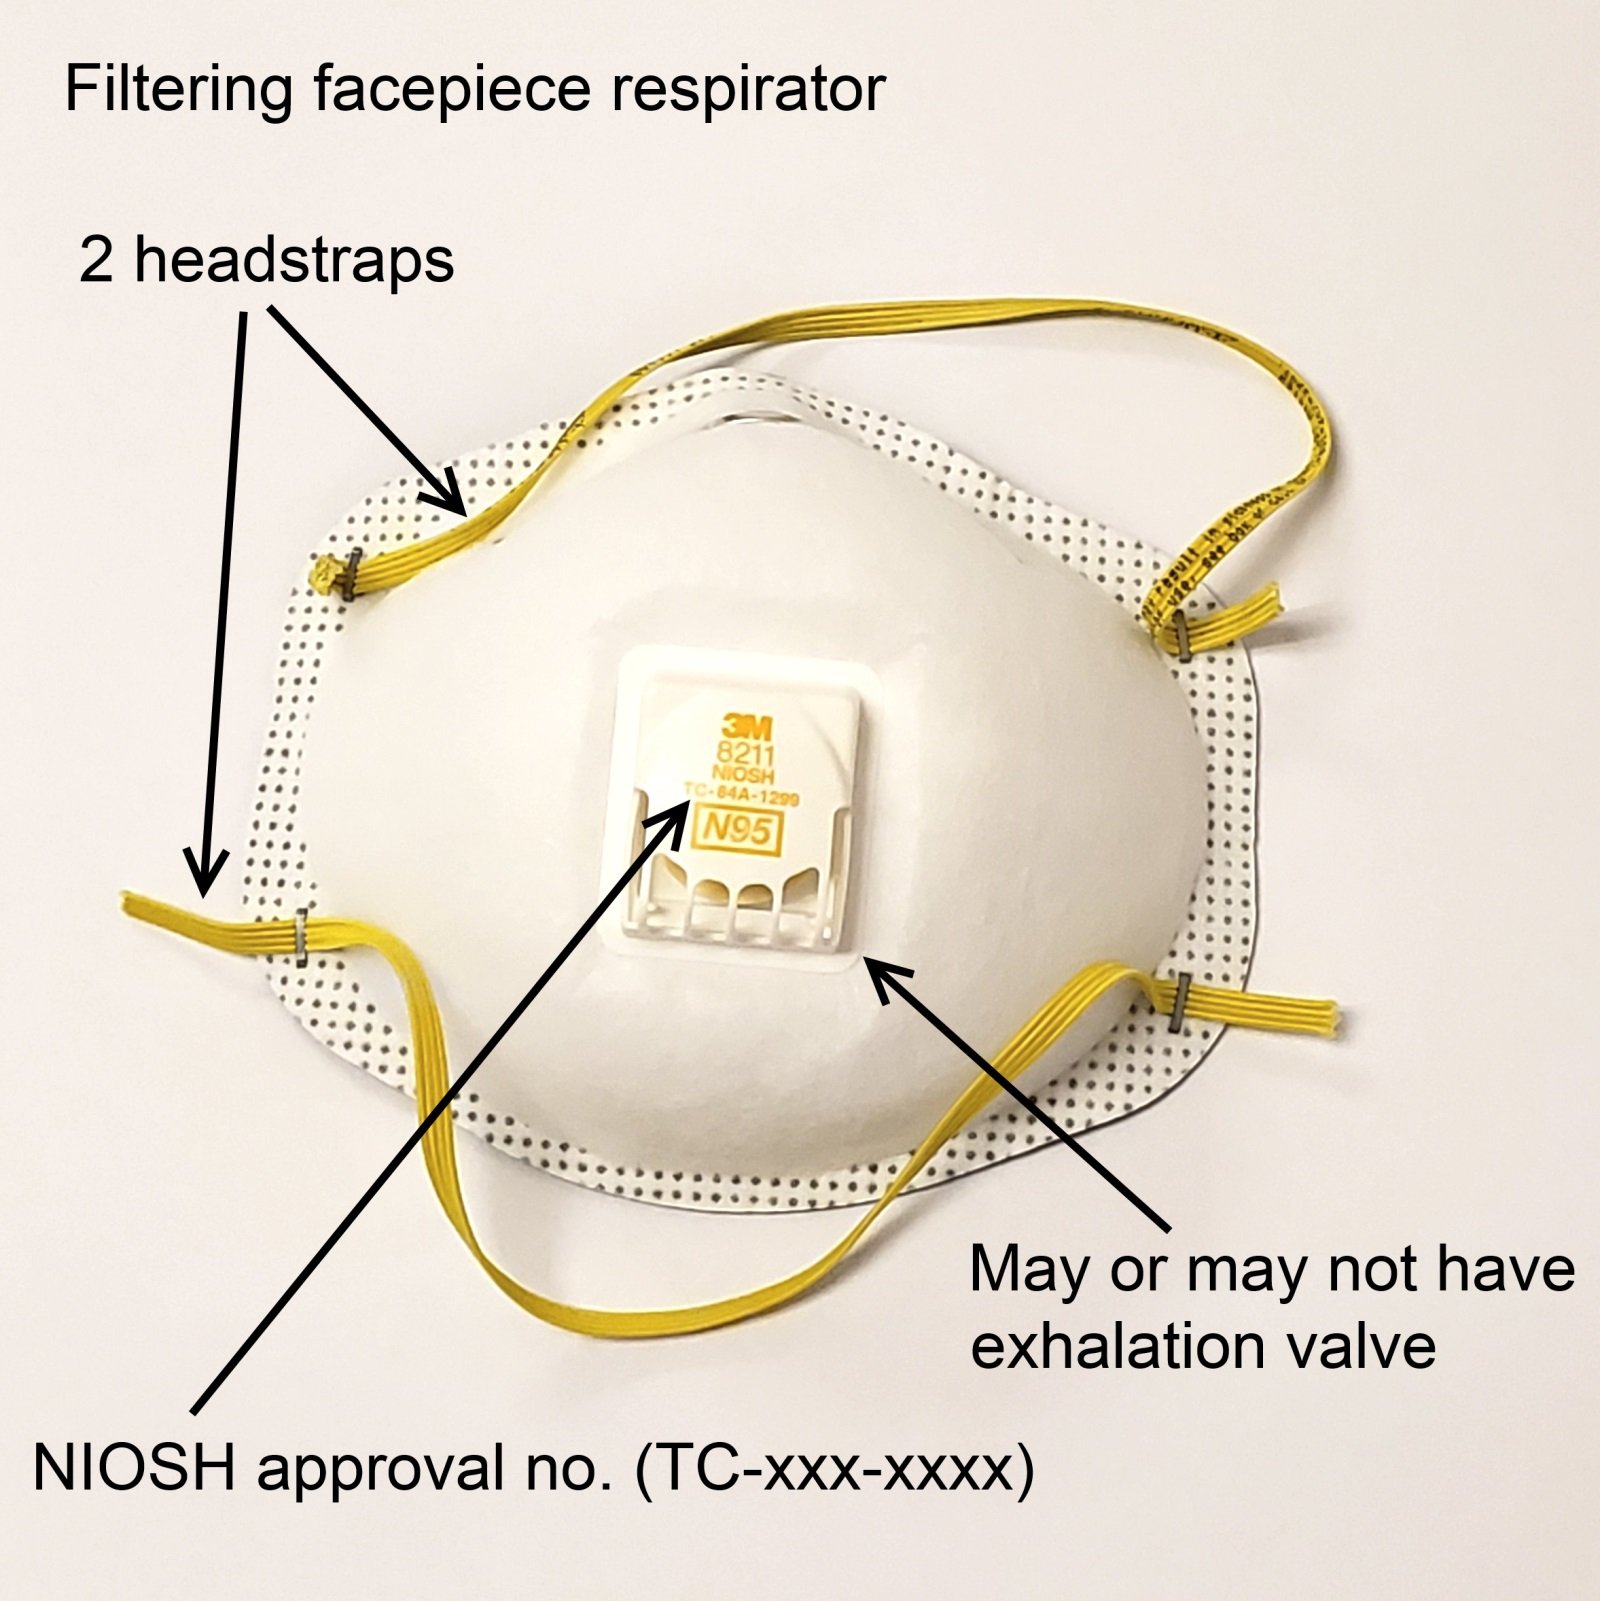 Filtering facepiece respirator